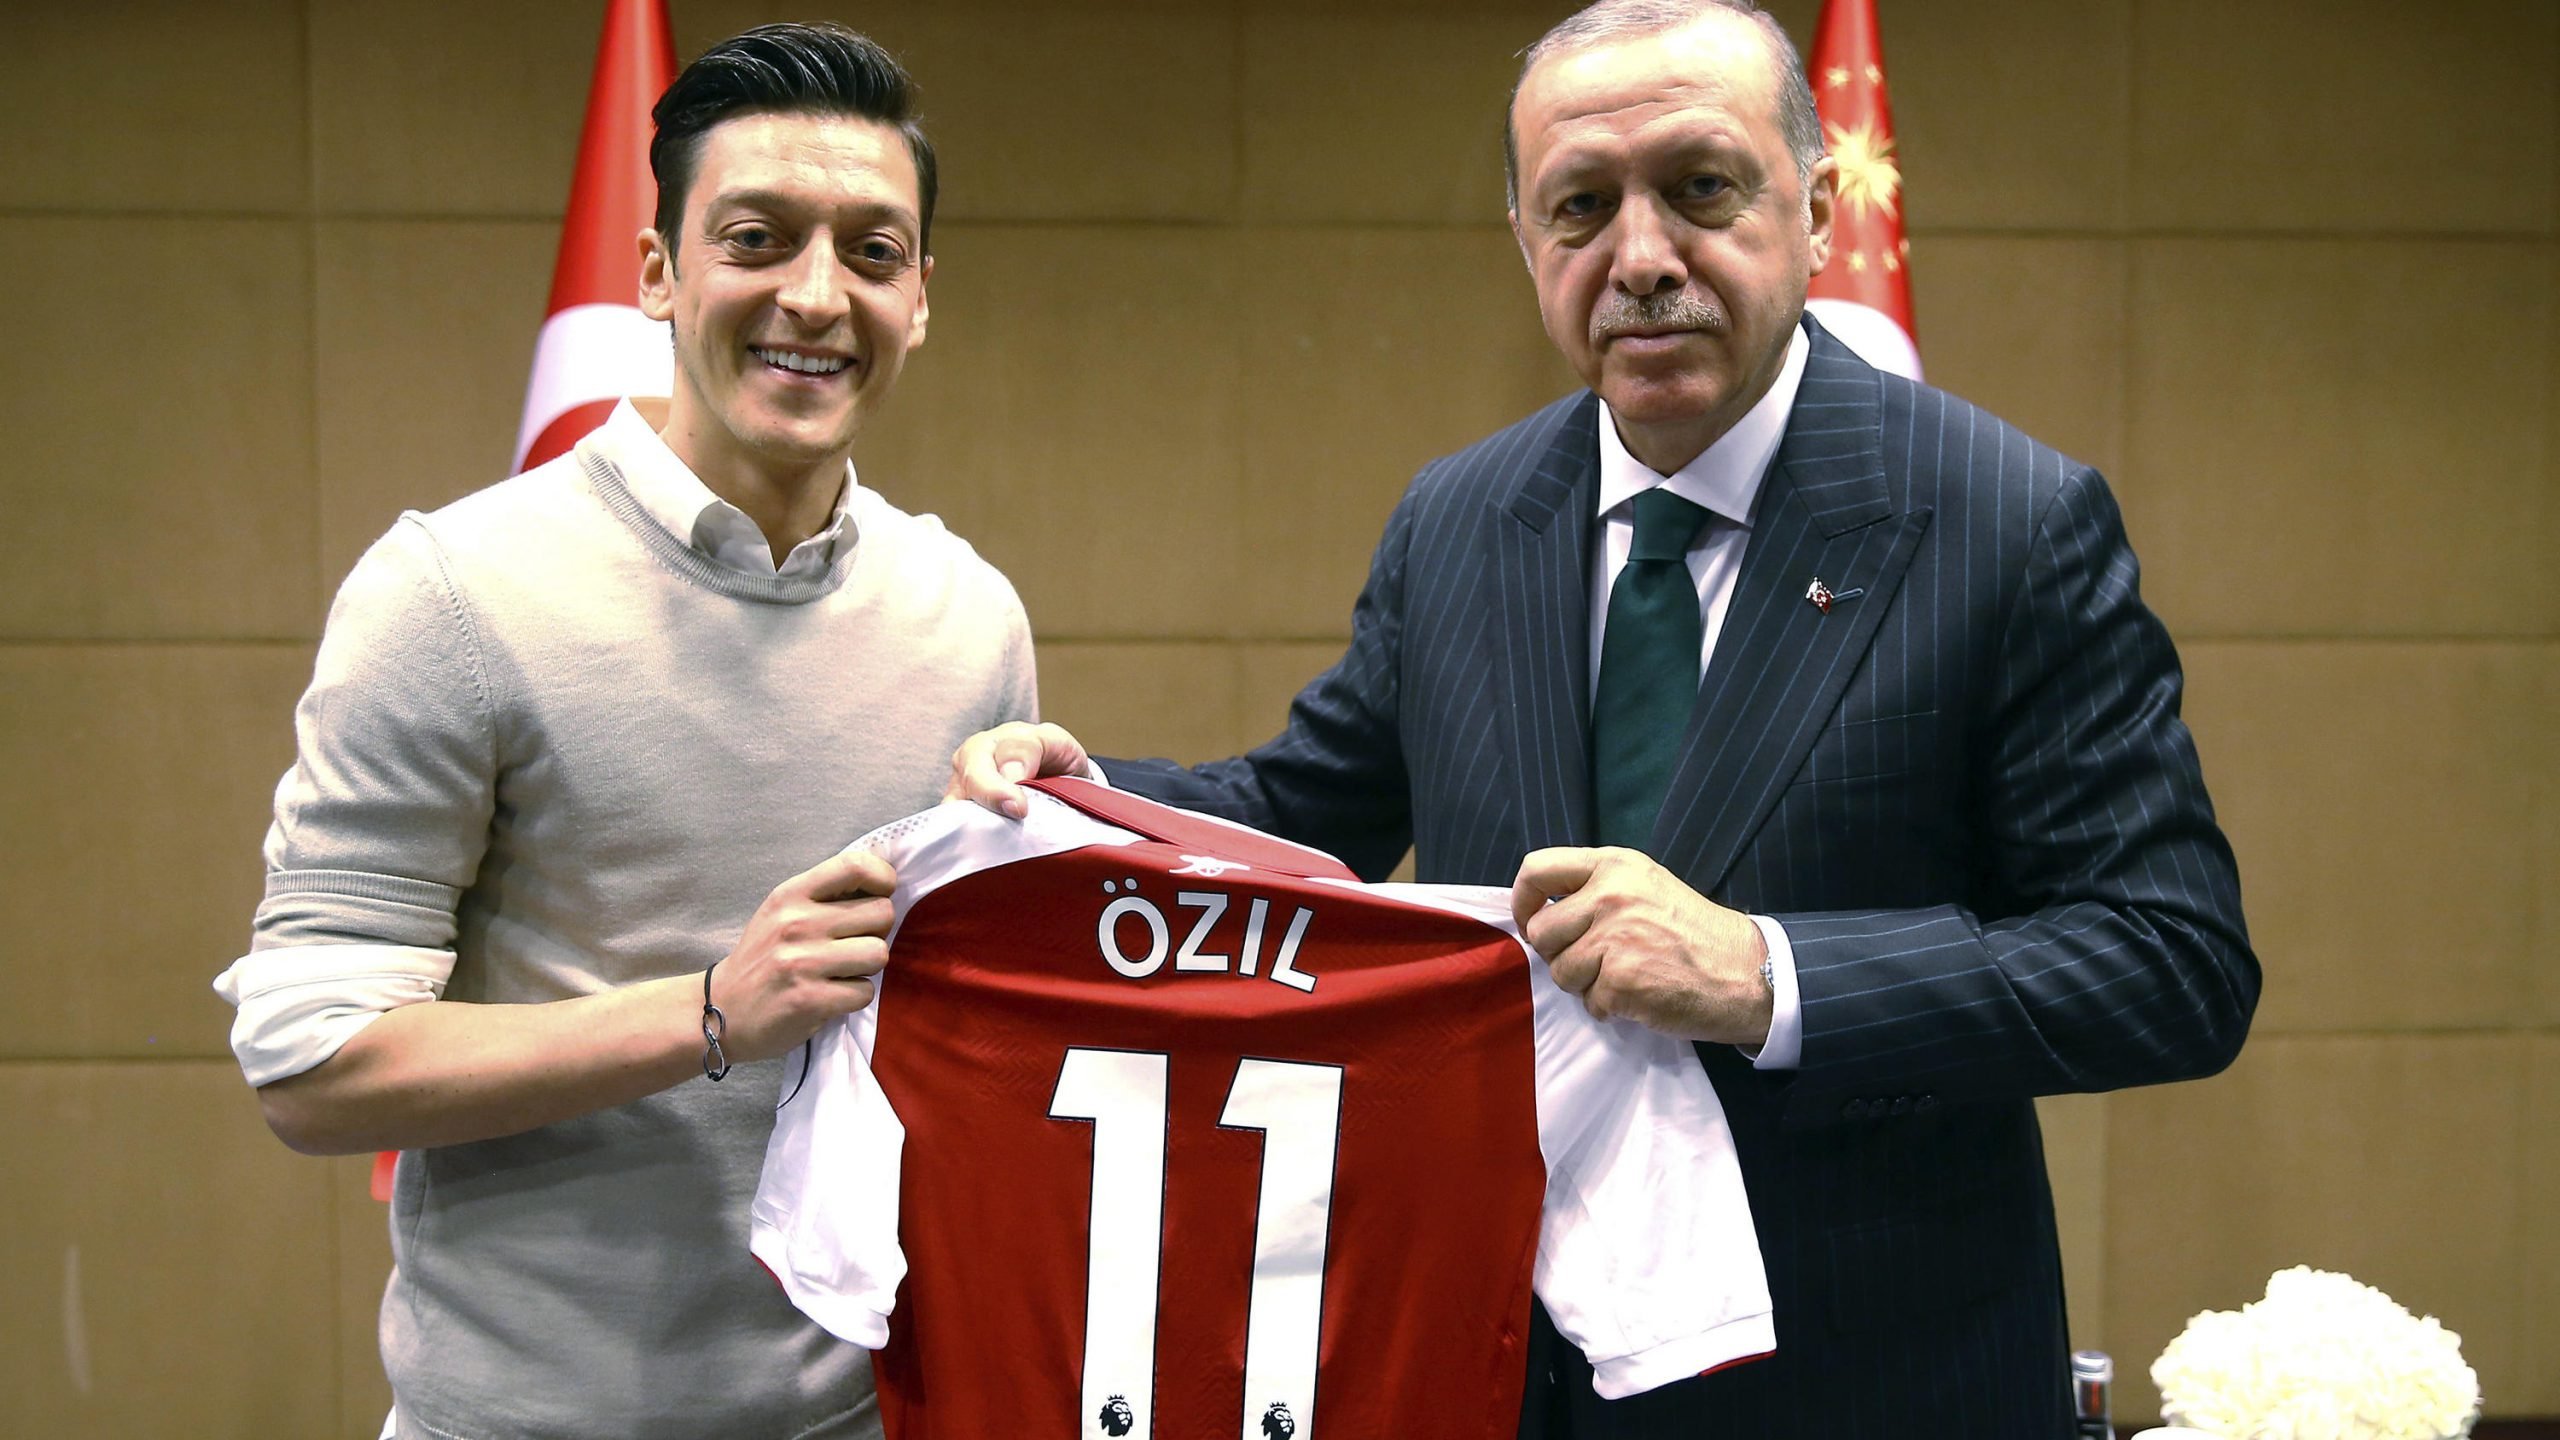 Özil und Erdogan posieren mit Özils Trikot|